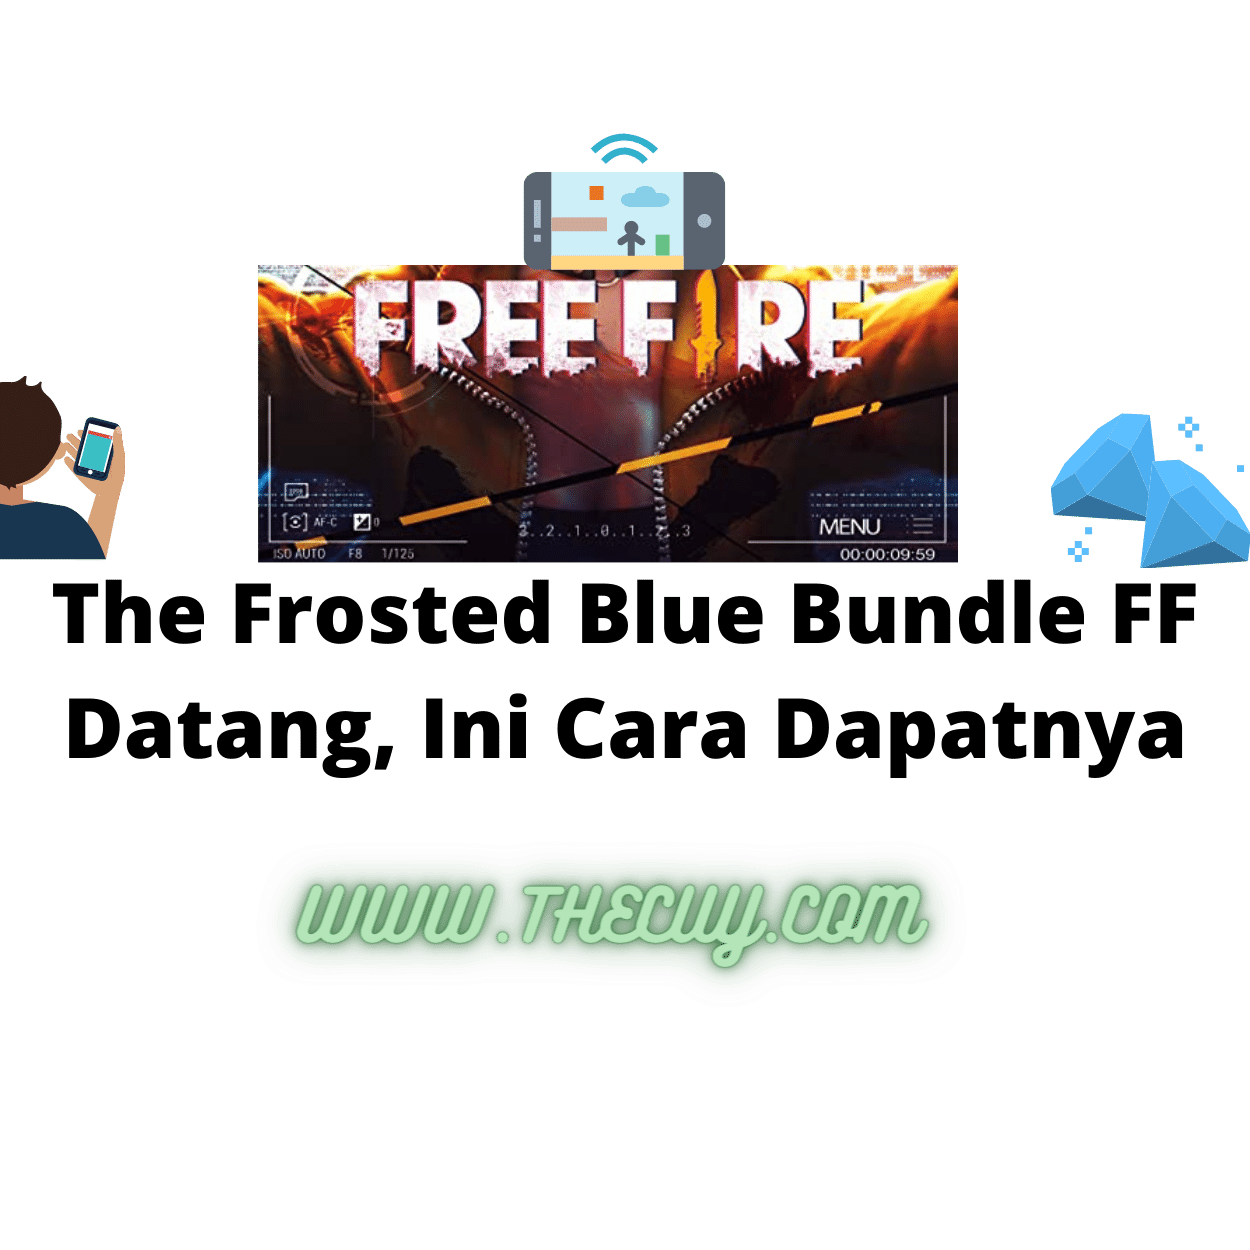 The Frosted Blue Bundle FF Datang, Ini Cara Dapatnya